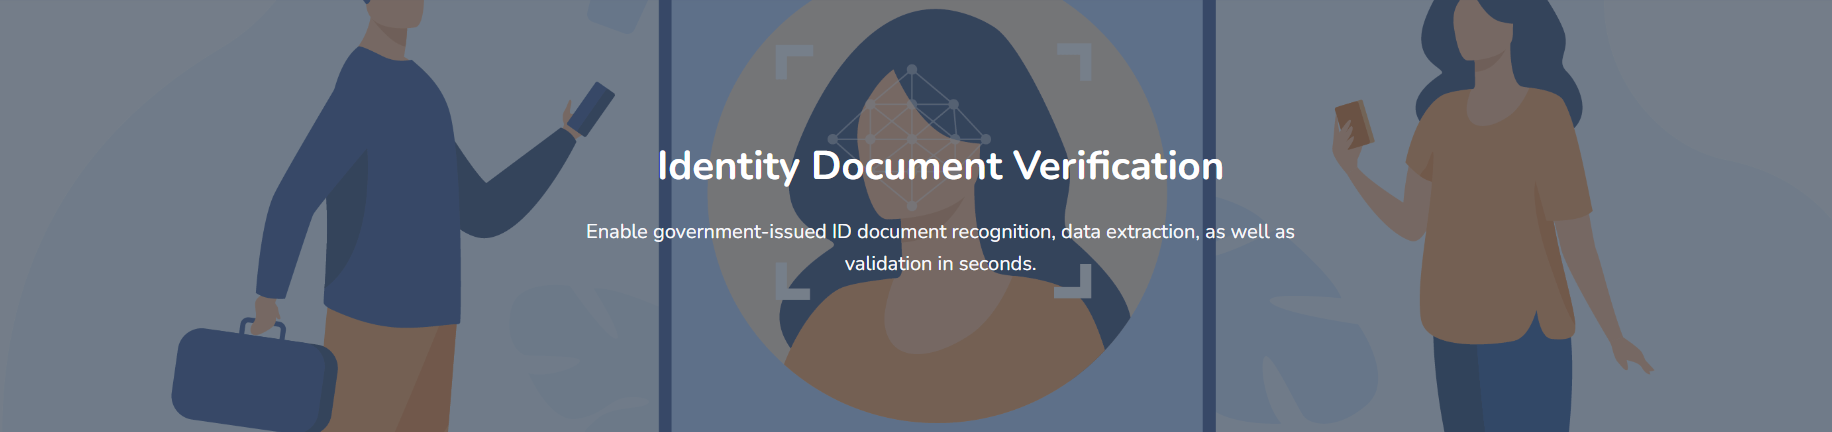 Identity Document Verification